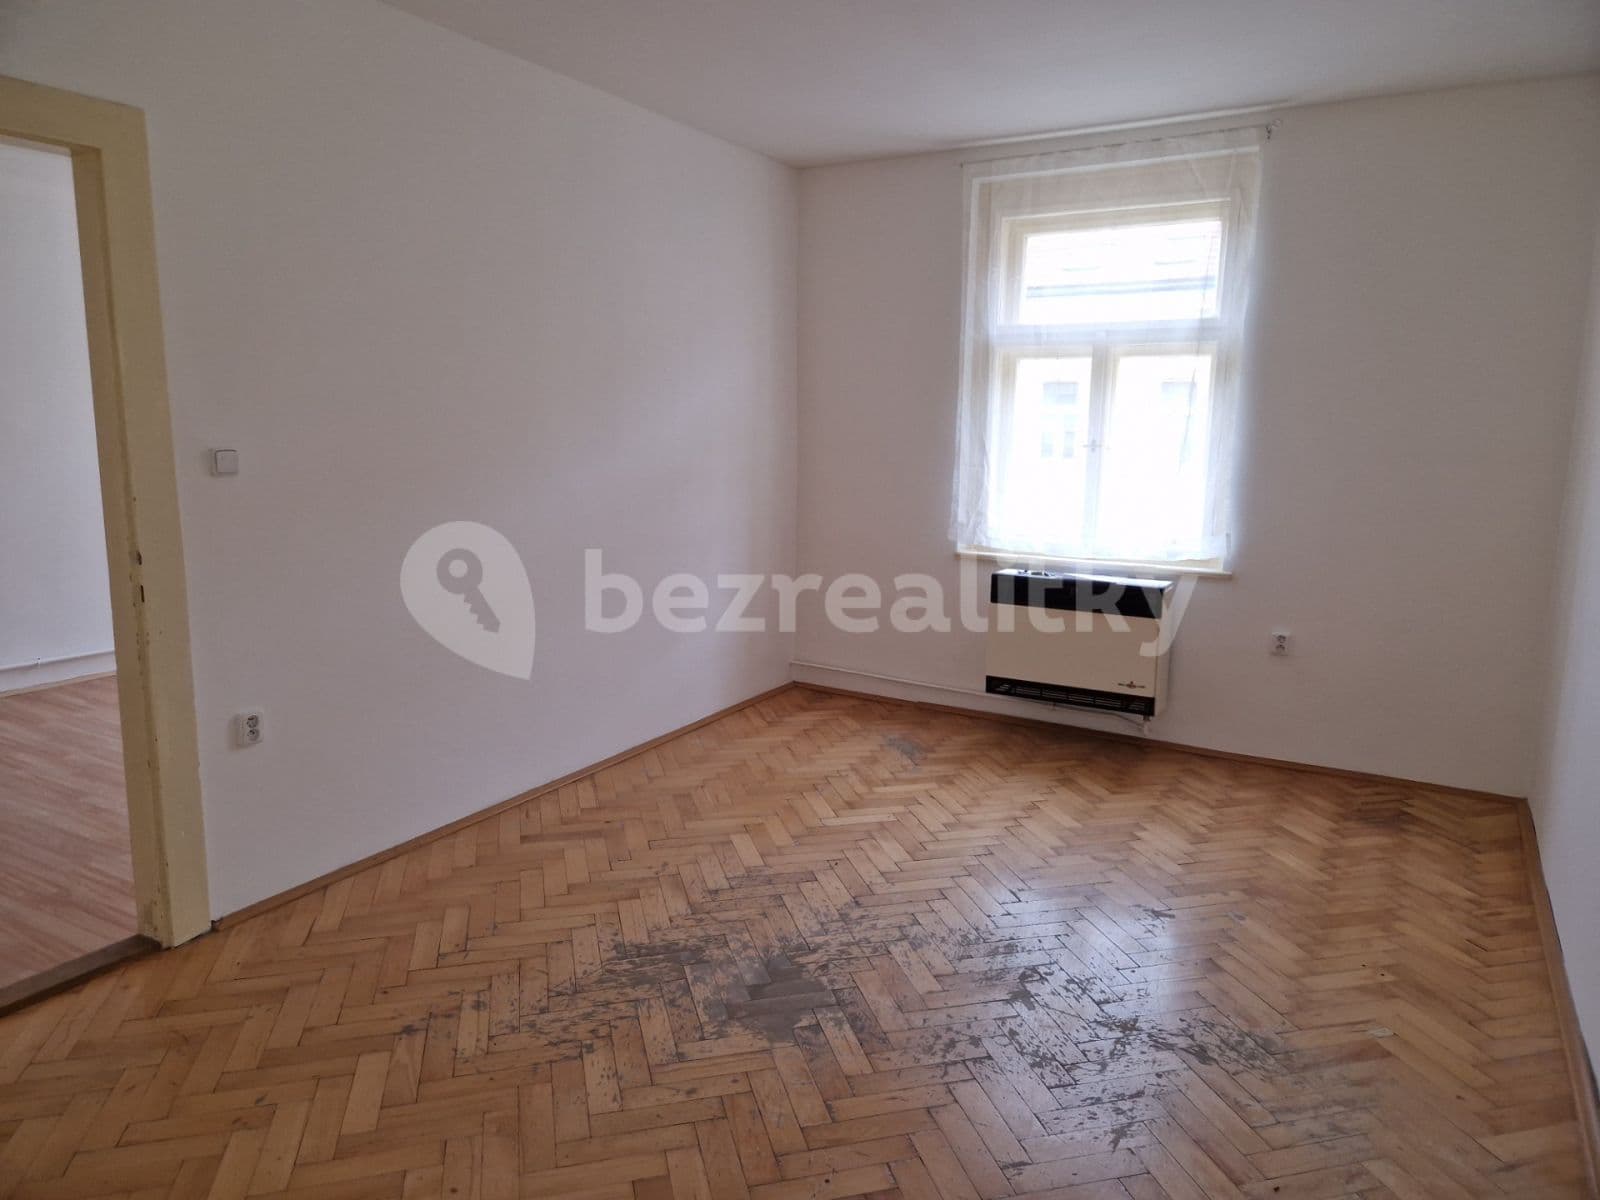 2 bedroom with open-plan kitchen flat for sale, 75 m², Korunní, Prague, Prague